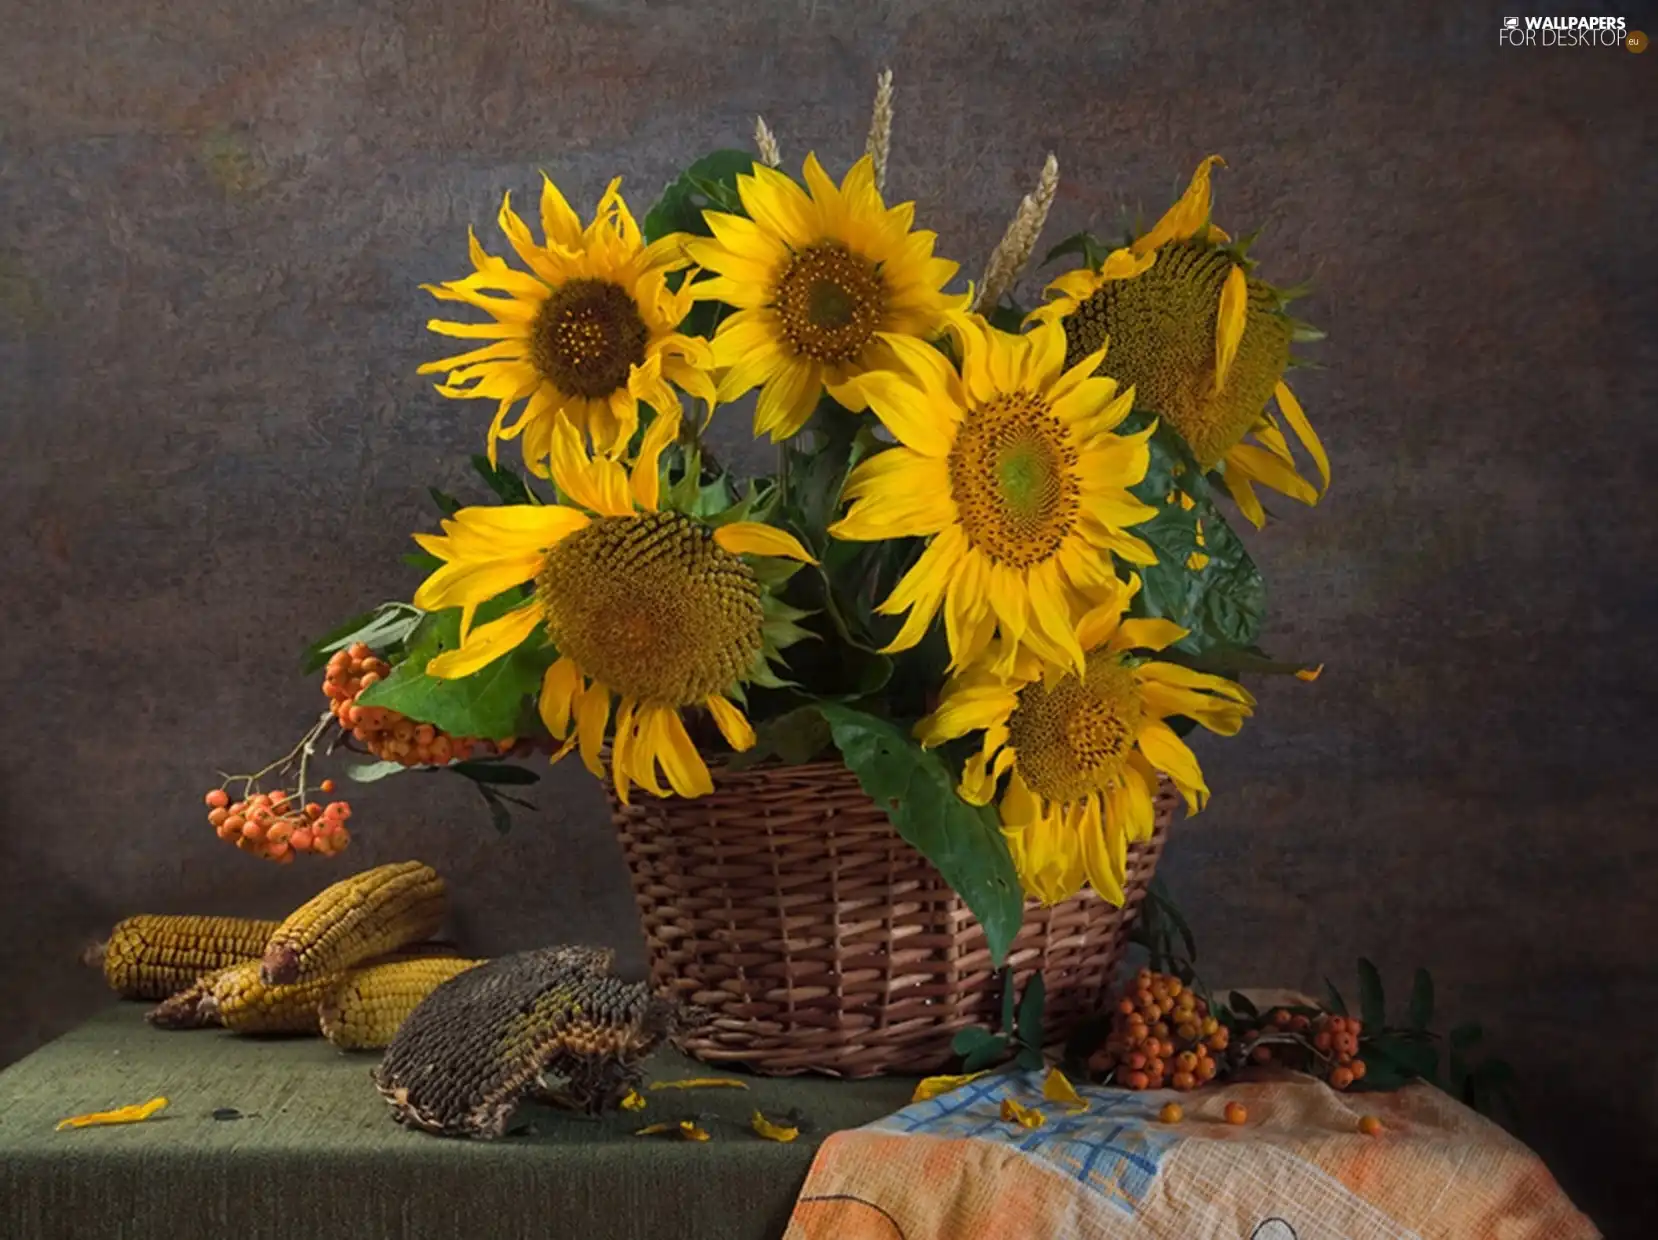 basket, Nice sunflowers, corn, wicker